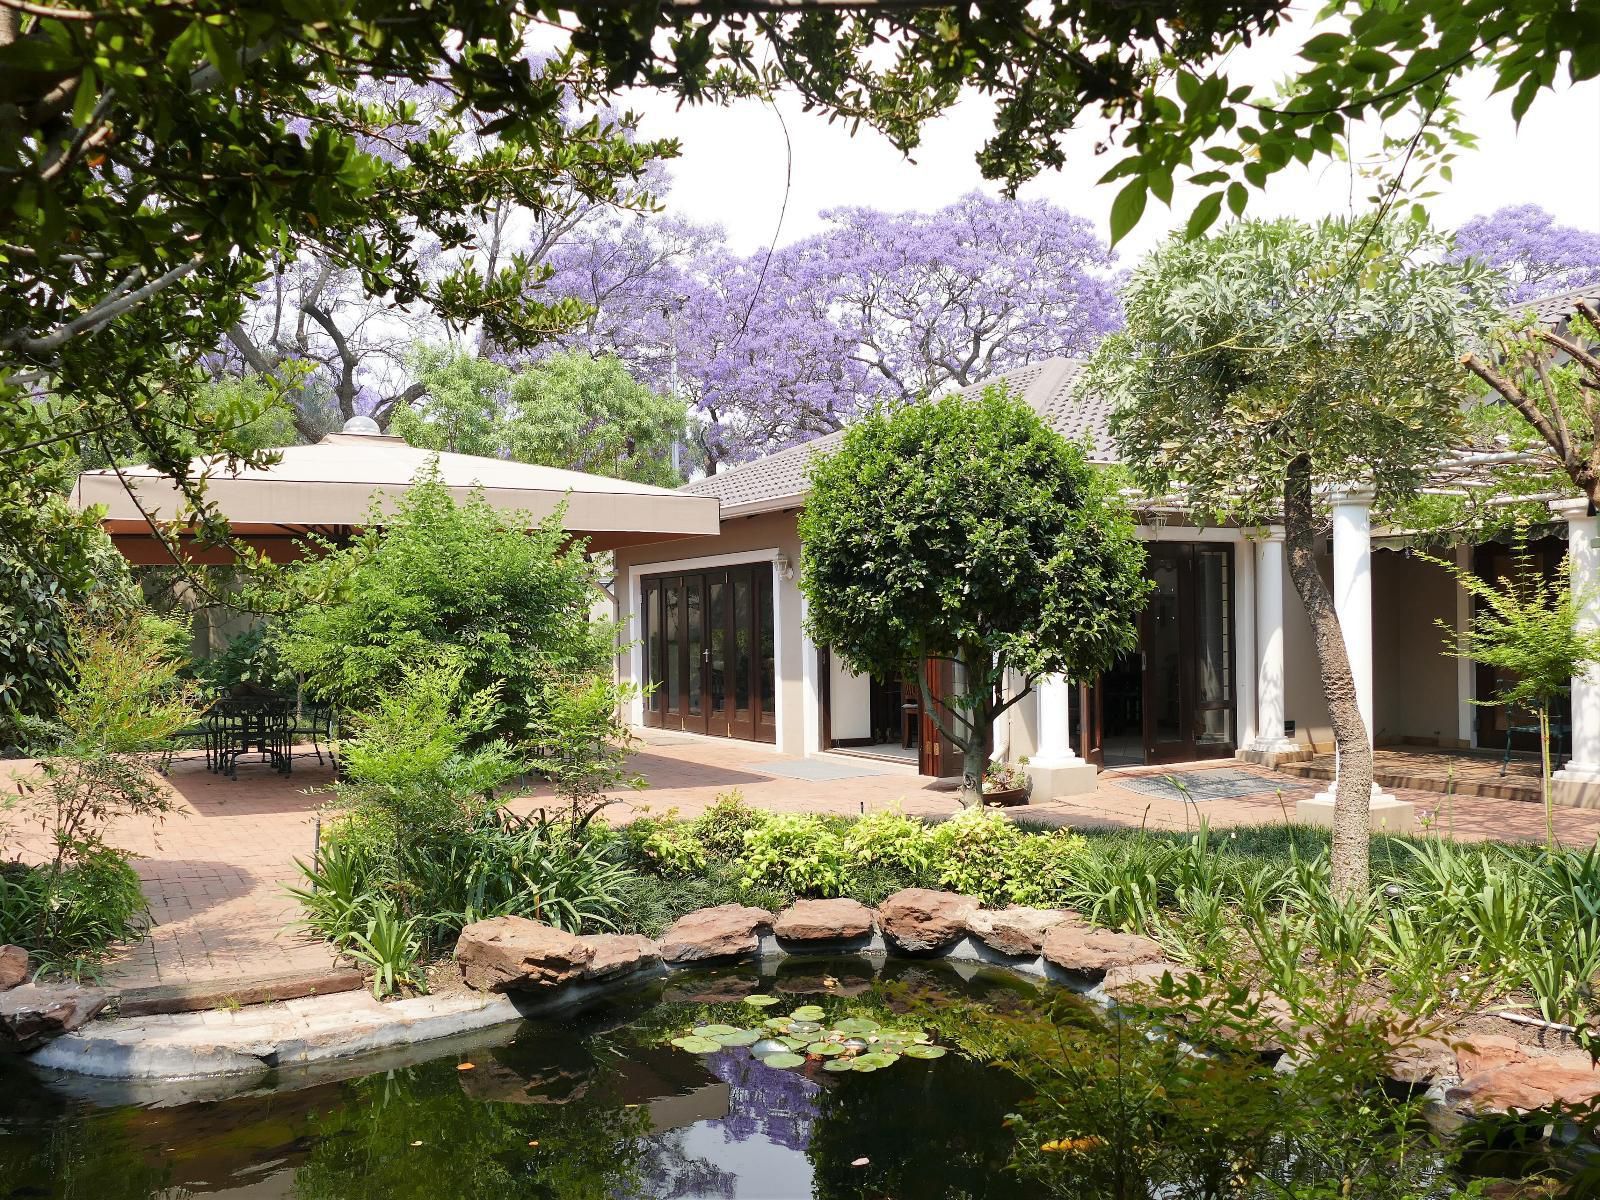 174 Premier Guest House Waterkloof Pretoria Tshwane Gauteng South Africa House, Building, Architecture, Plant, Nature, Garden